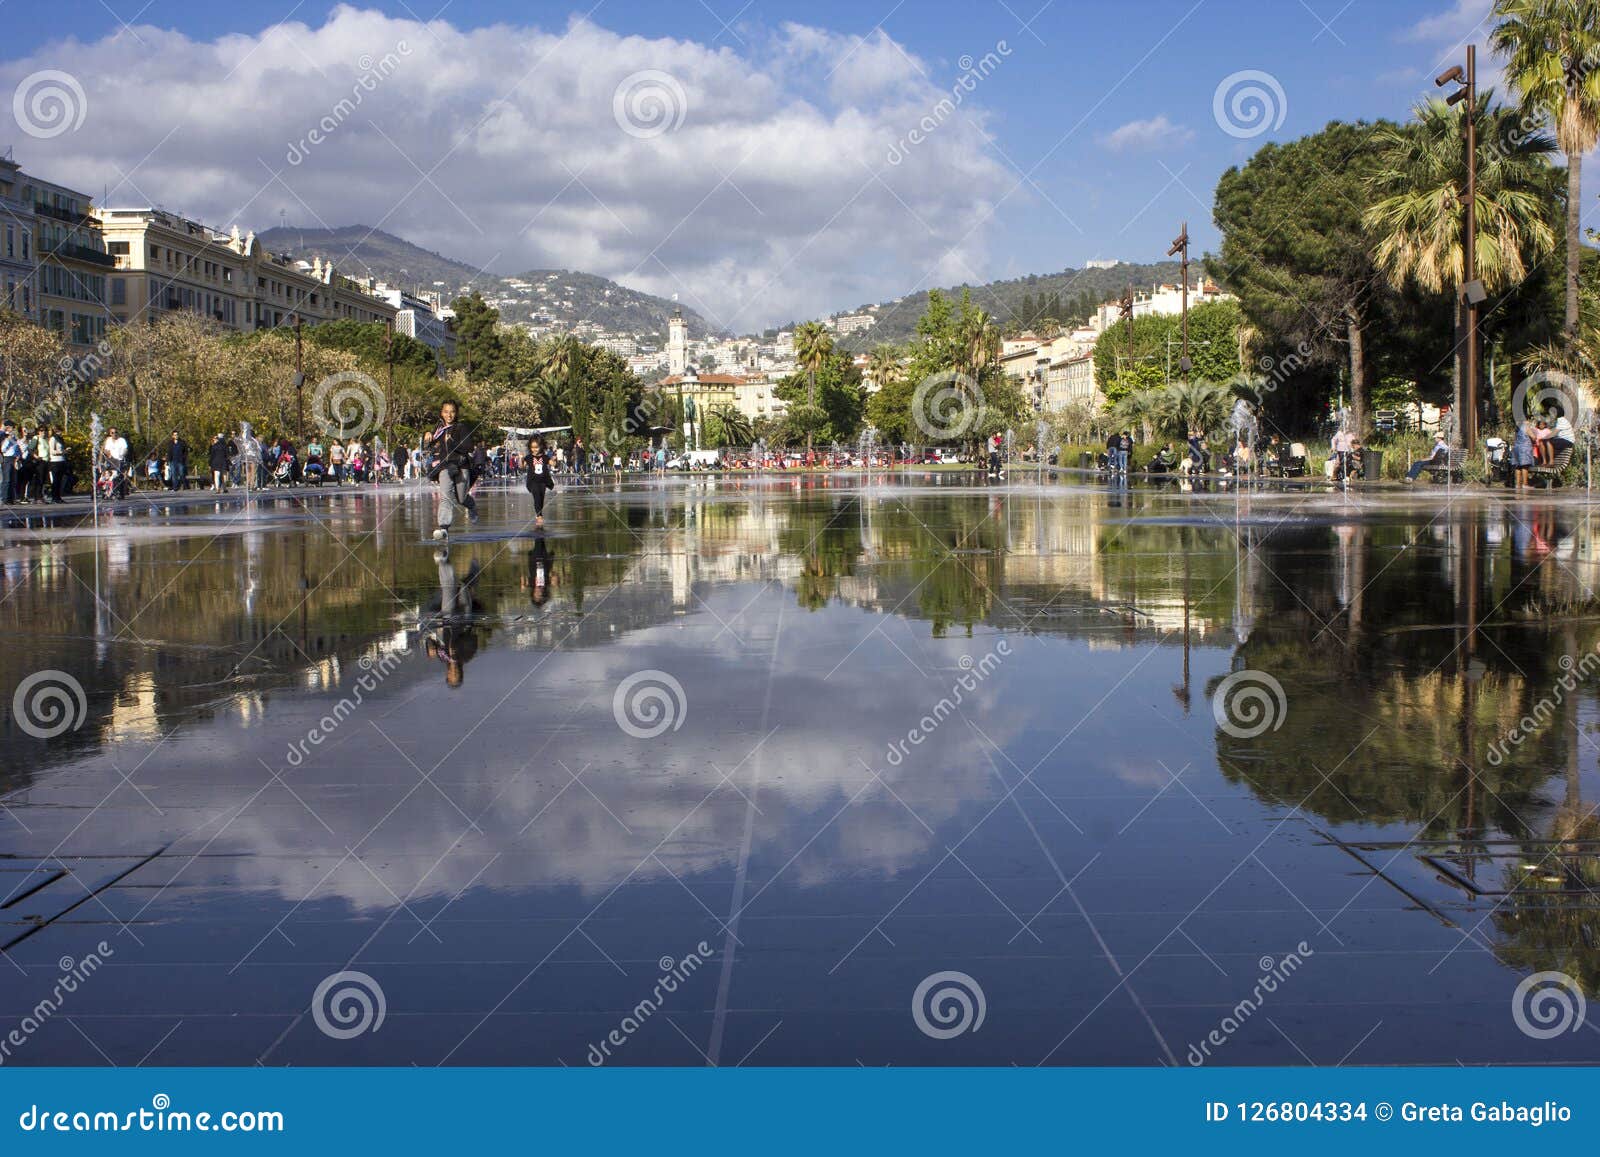 Promenade Du Paillon in Nice Editorial Stock Image - Image of outdoor ...